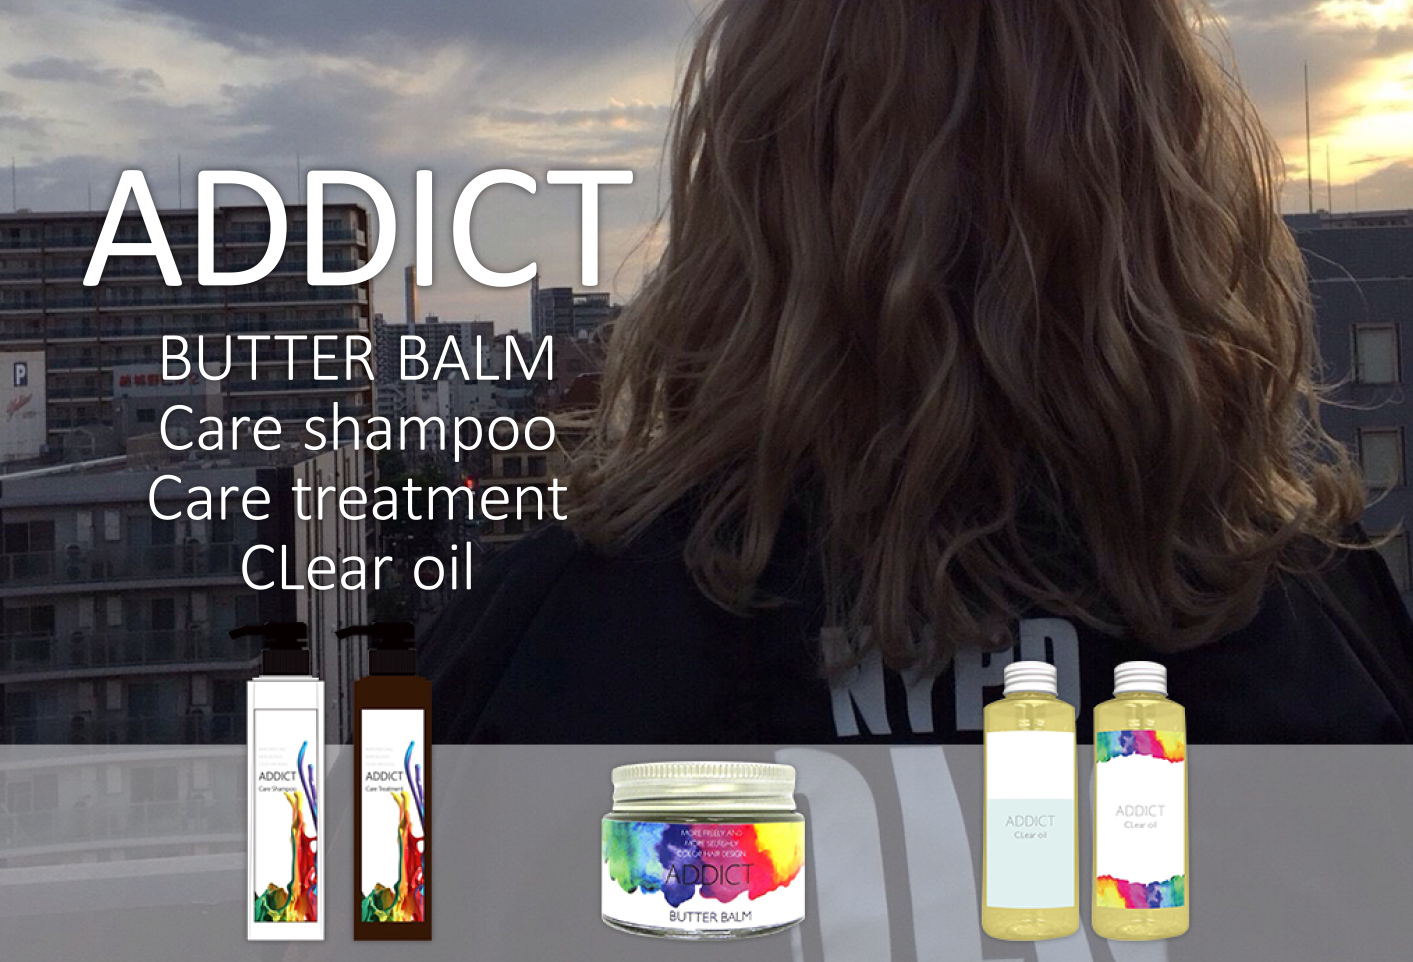 ADDICT | BUTTER BALM Care shampoo Care treatment CLear oil